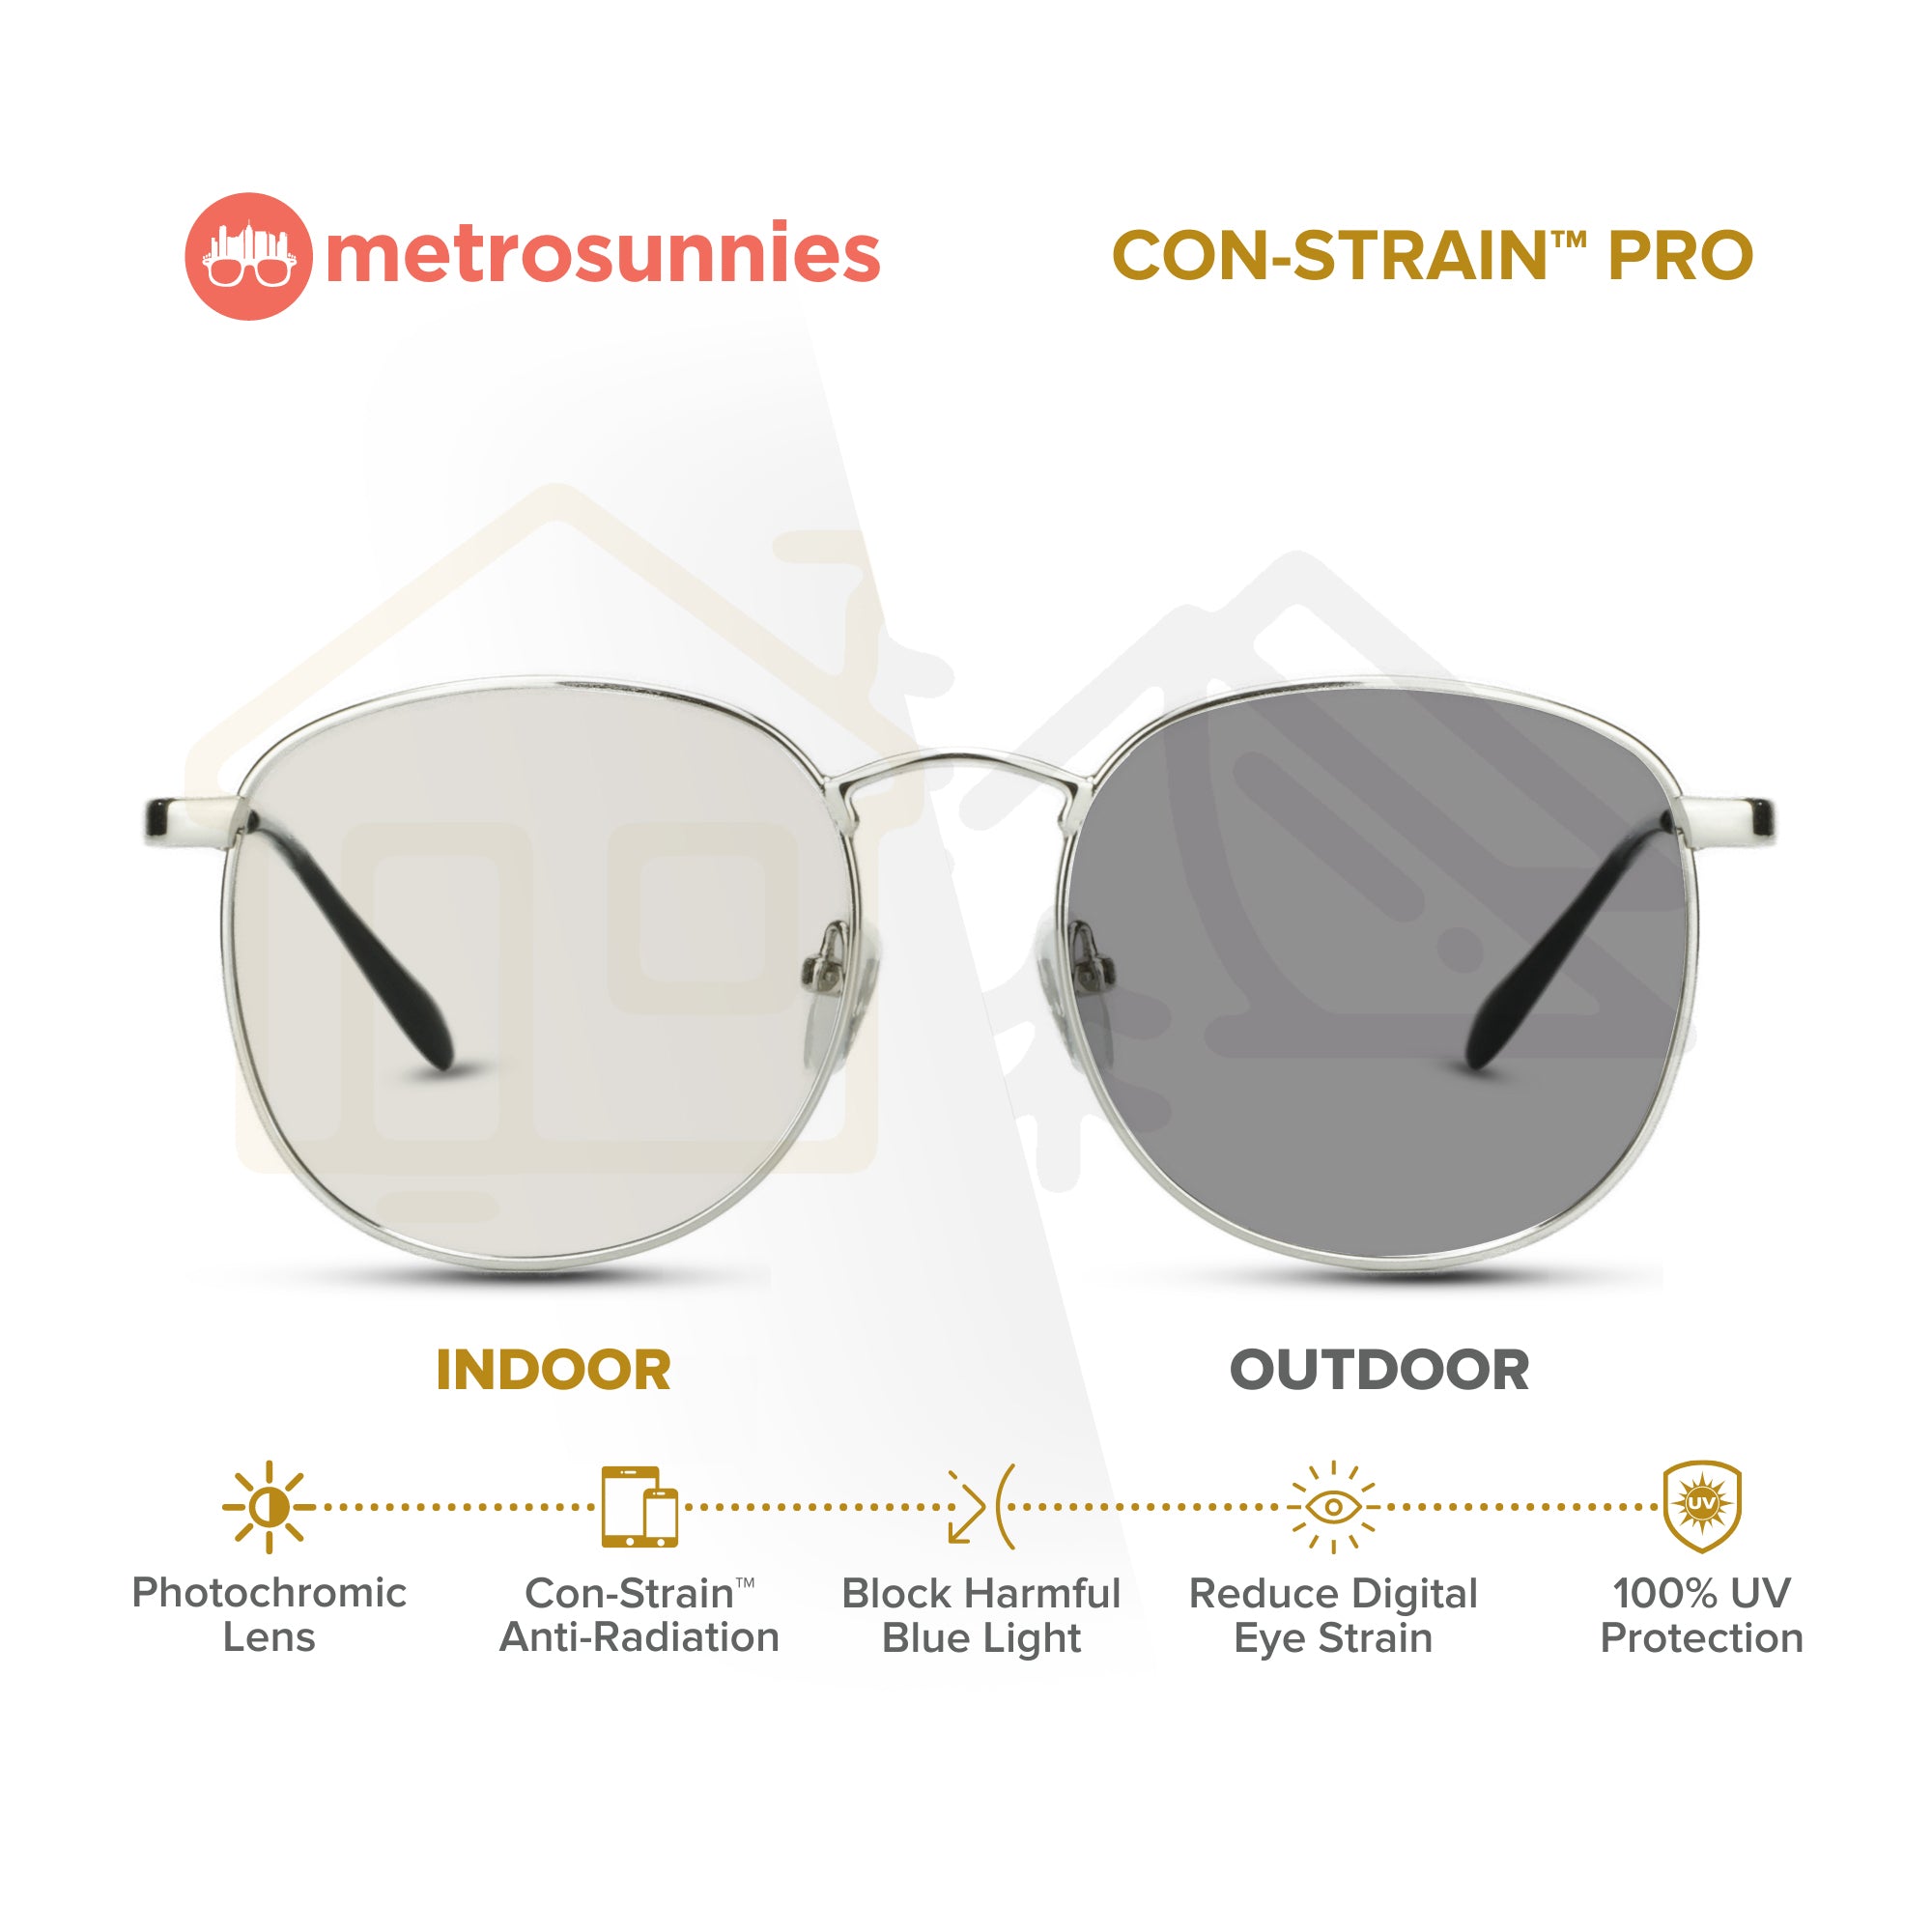 MetroSunnies Judge Specs (Silver) / Con-Strain Blue Light / Anti-Radiation Computer Eyeglasses